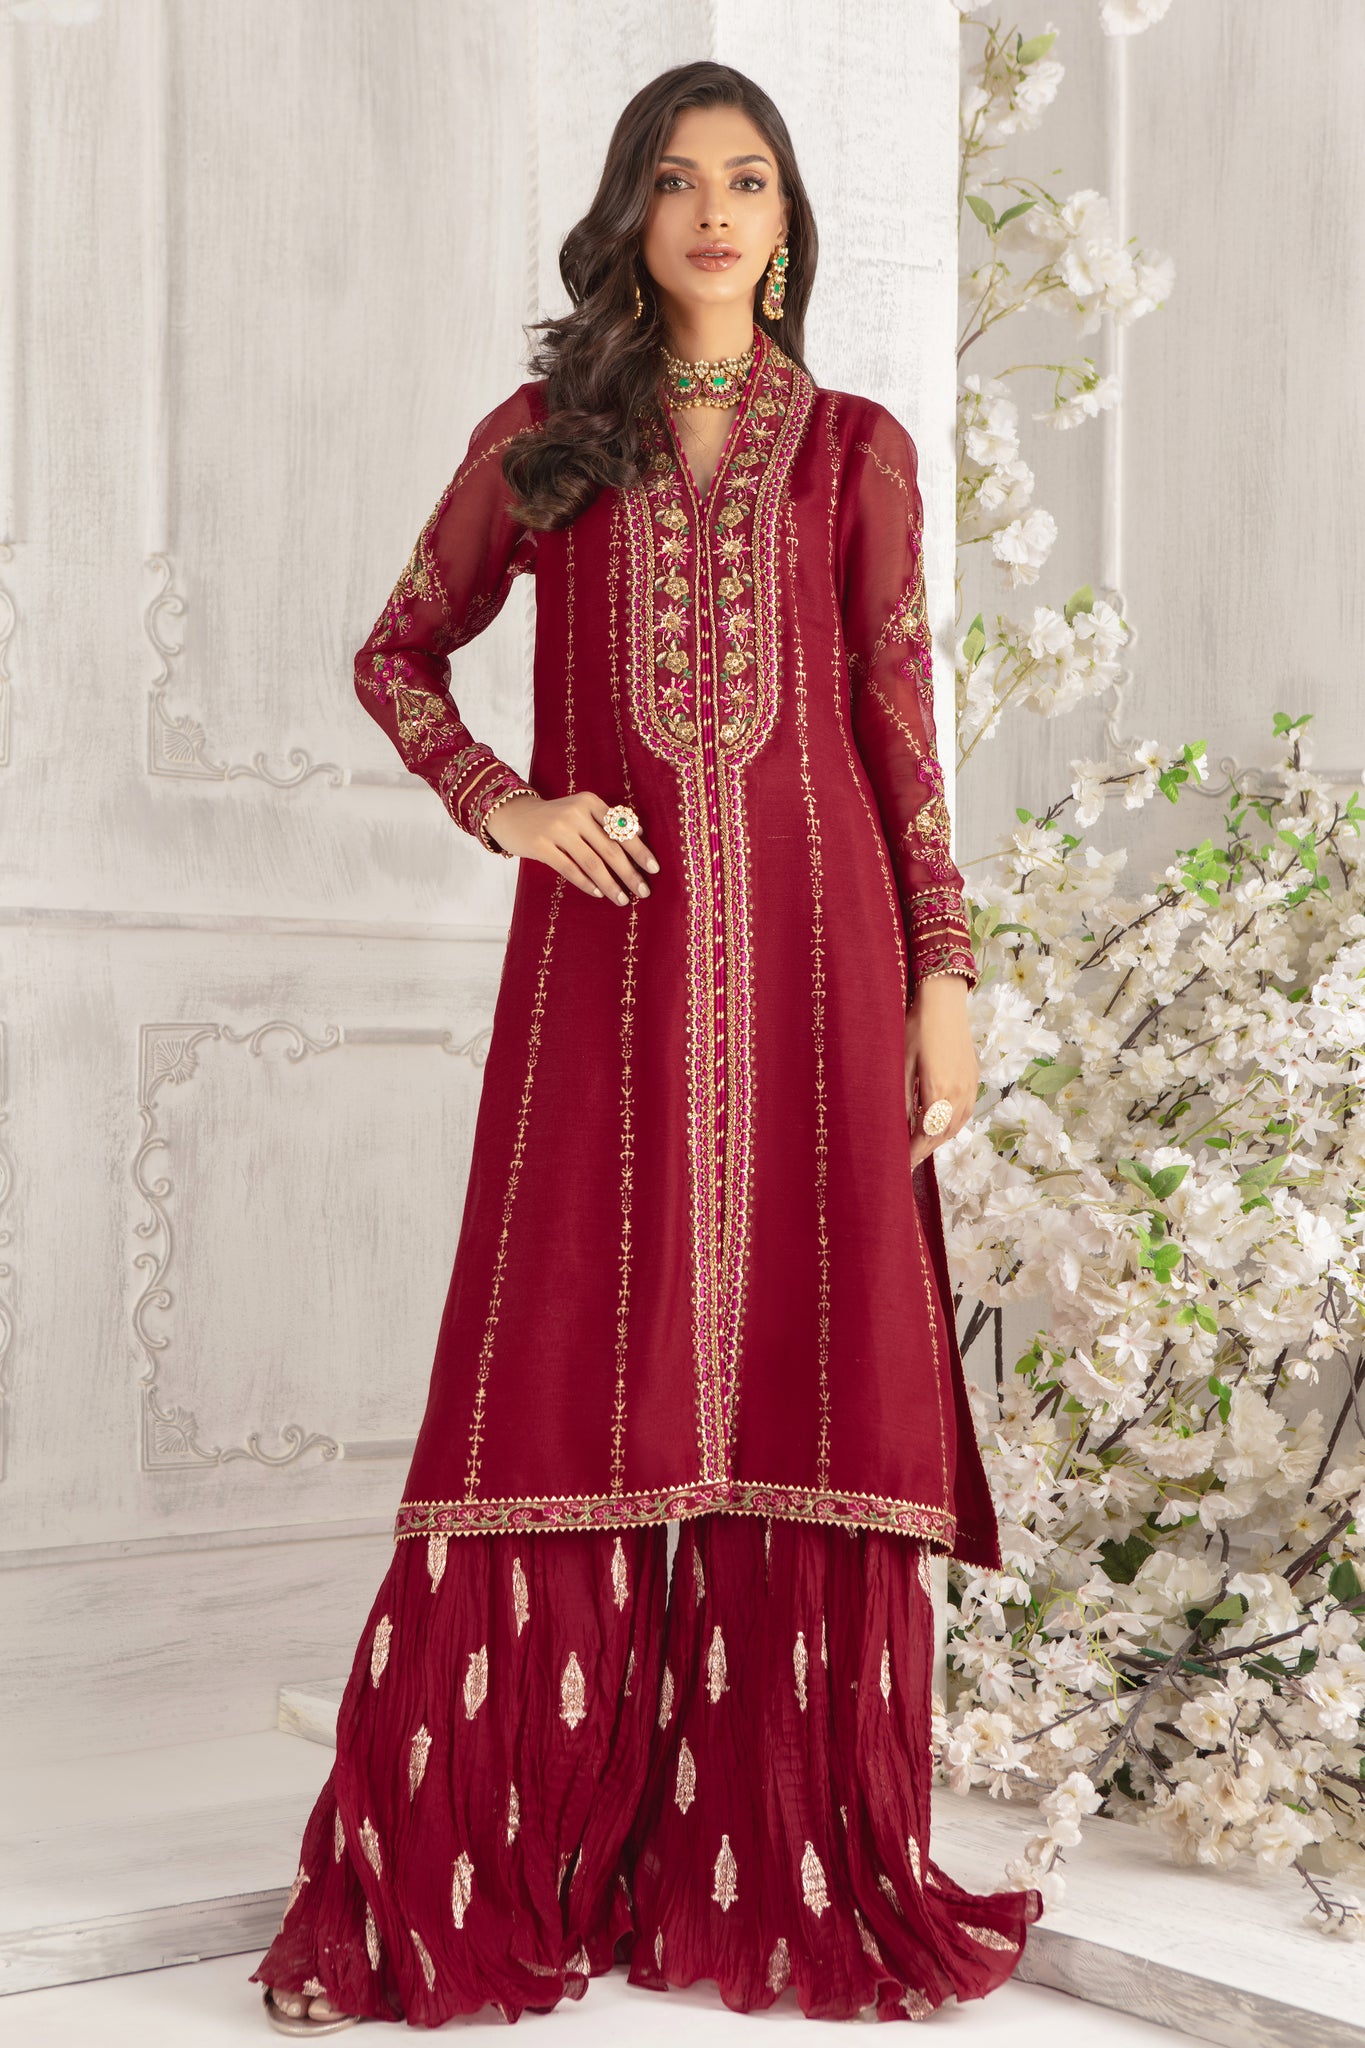 Zoya | Pakistani Designer Outfit | Sarosh Salman